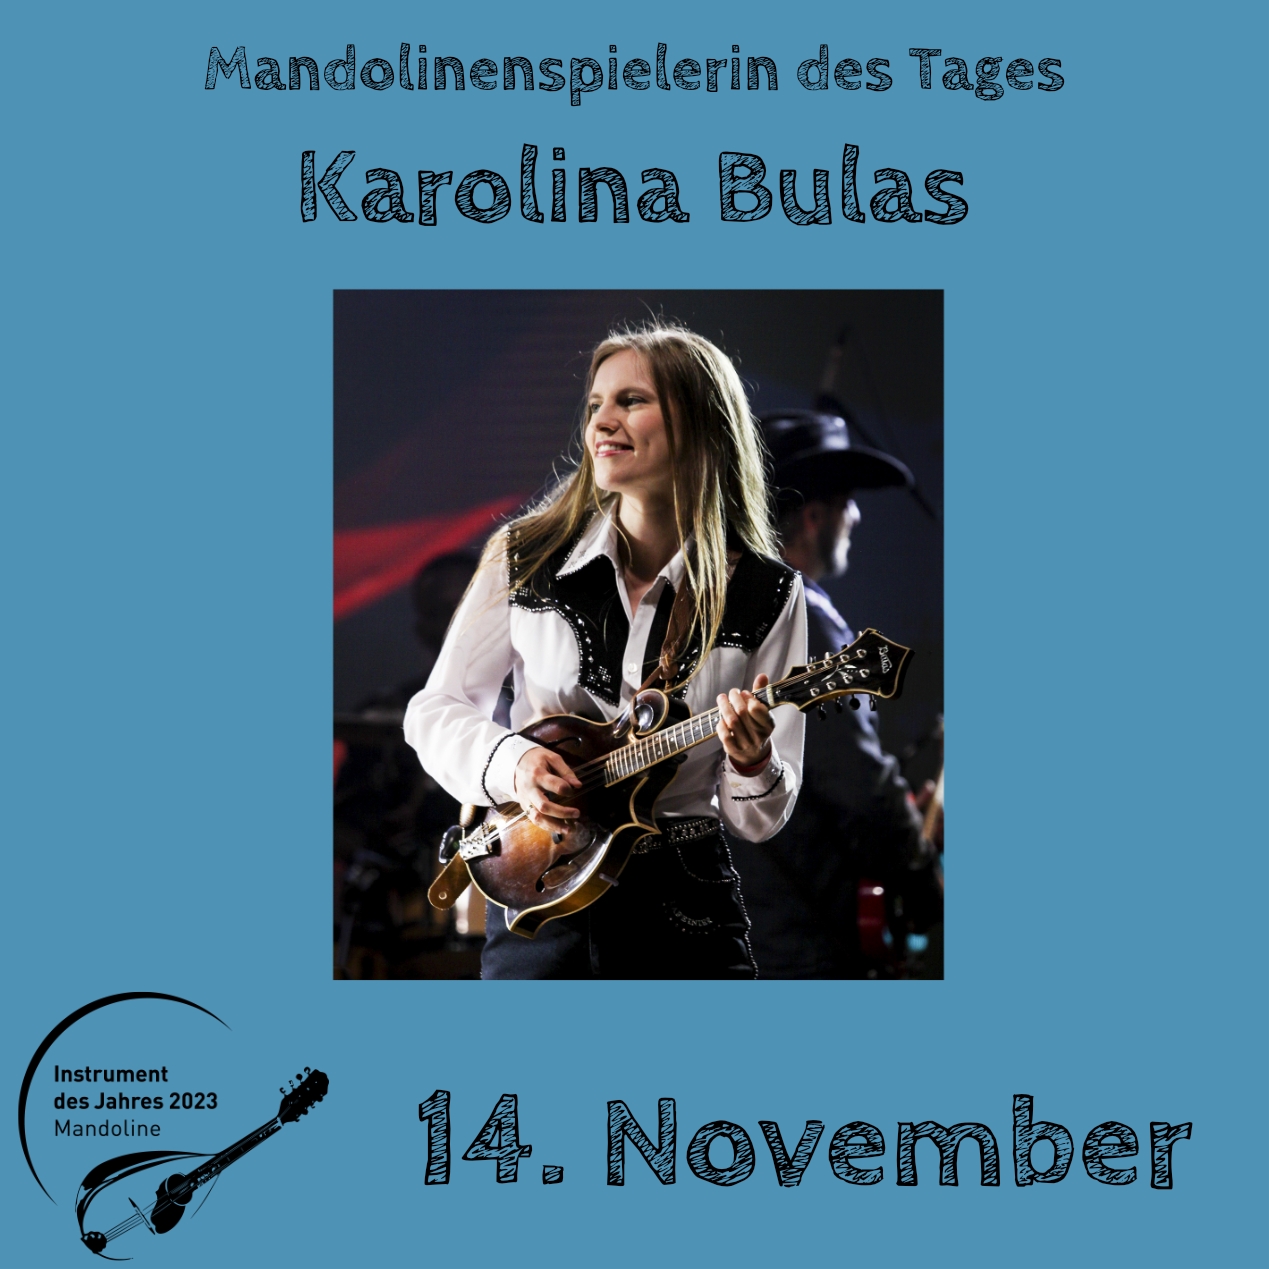 14. November - Karolina Bulas Instrument des Jahres 2023 Mandolinenspieler Mandolinenspielerin des Tages